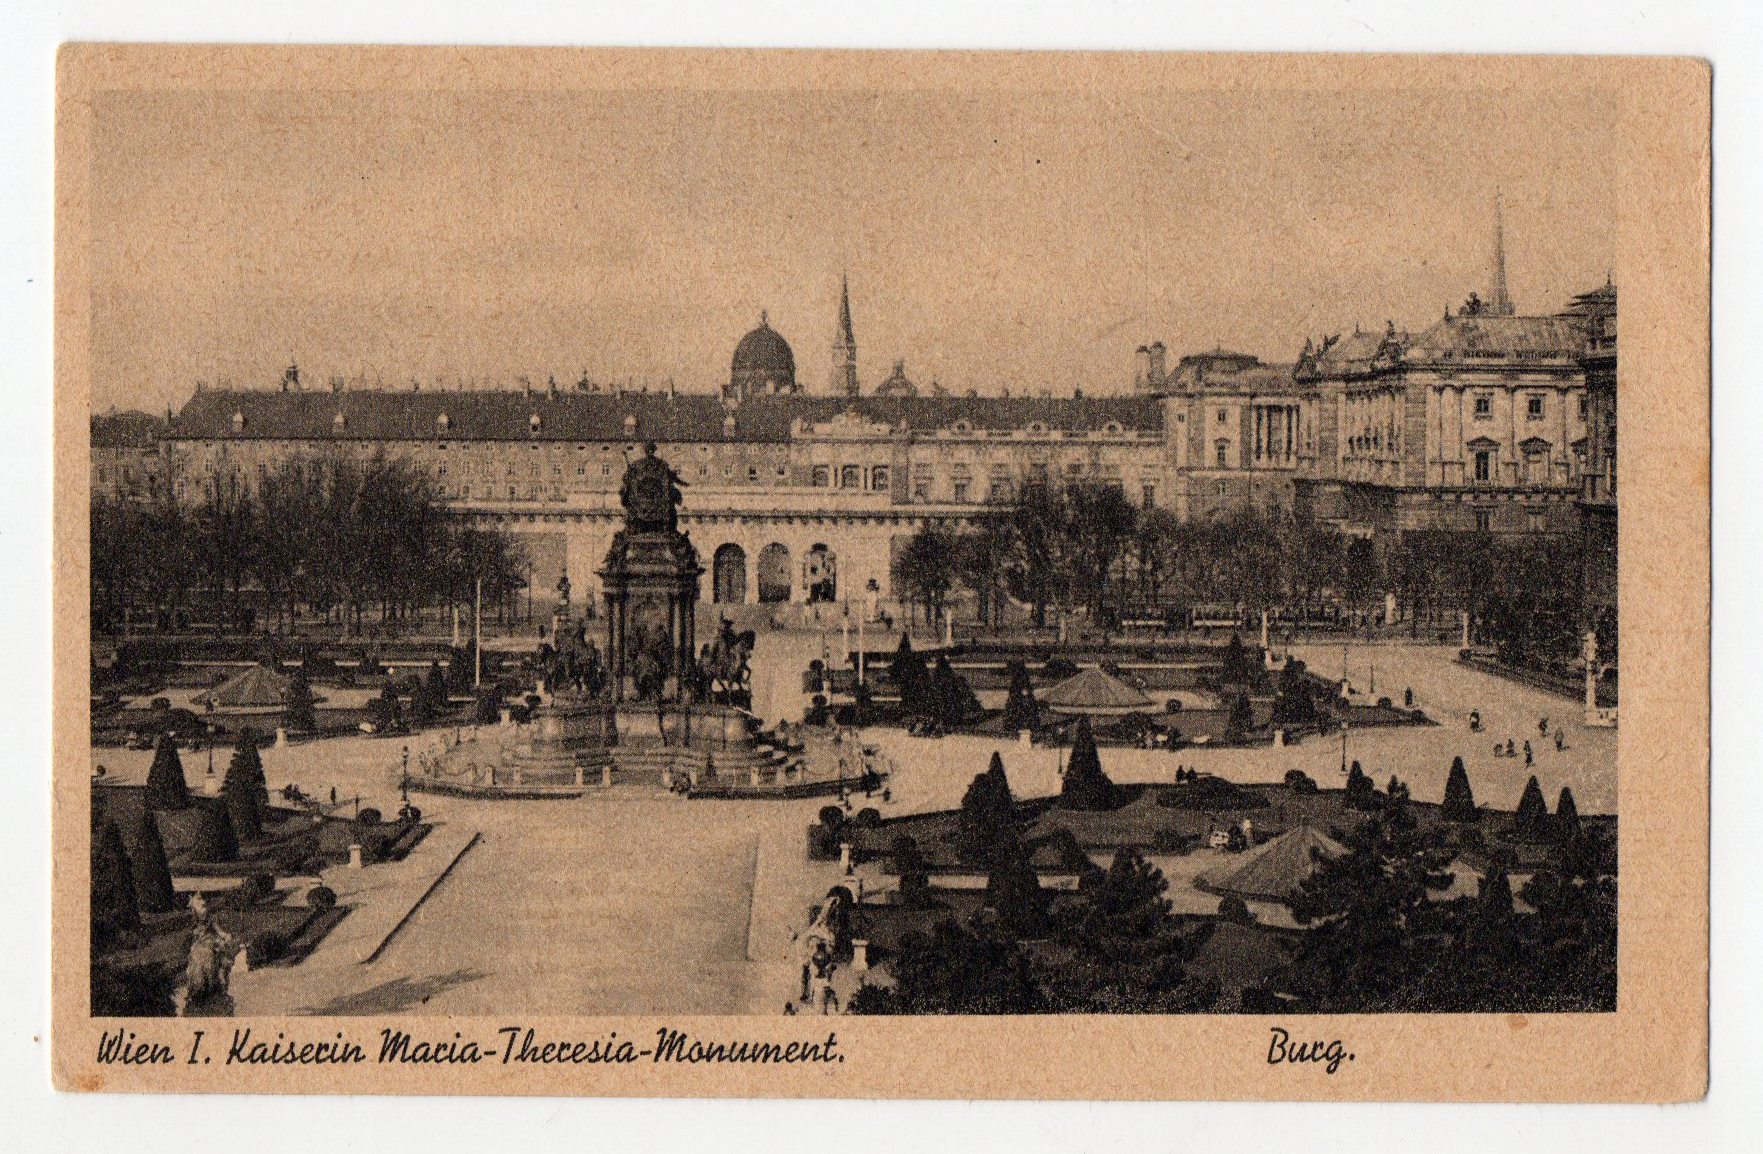 Поштова листівка. "Wien I. Kaiserin Maria-Theresia-Monument. Burg"